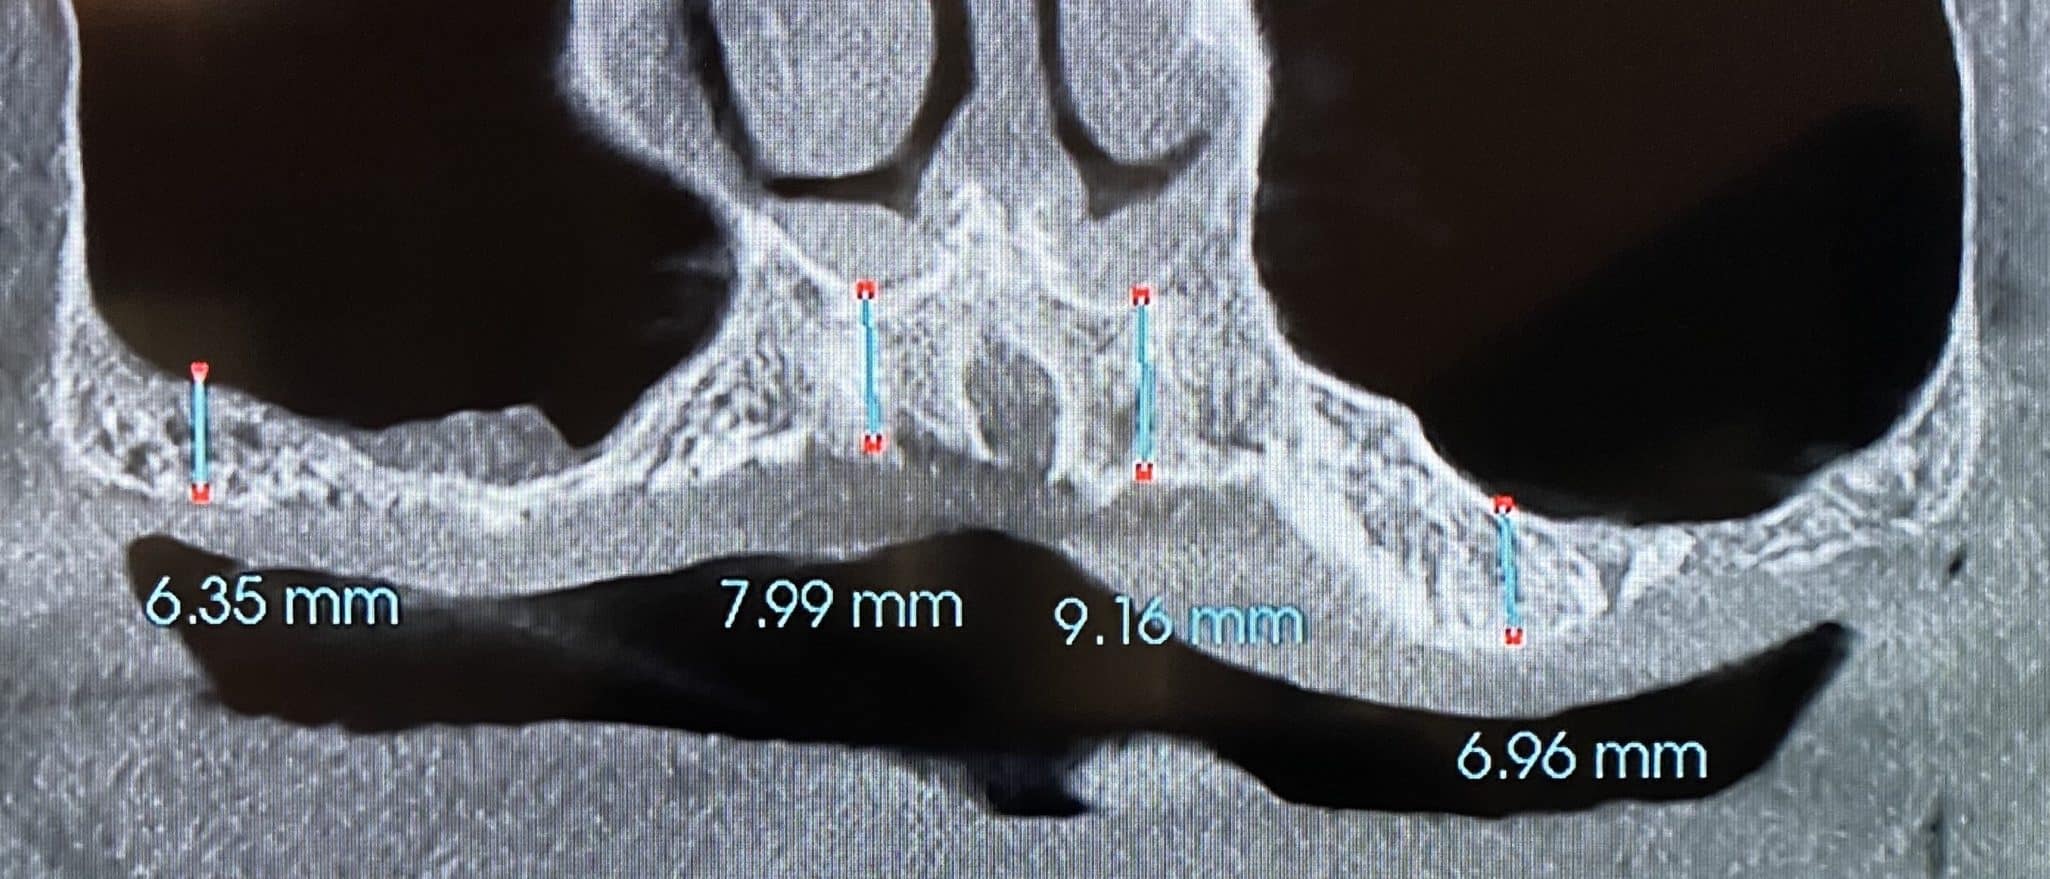 Ridge Splitting Procedure on a Severely Deficient Maxillary Alveolar Ridge with Multiple Implant Placements